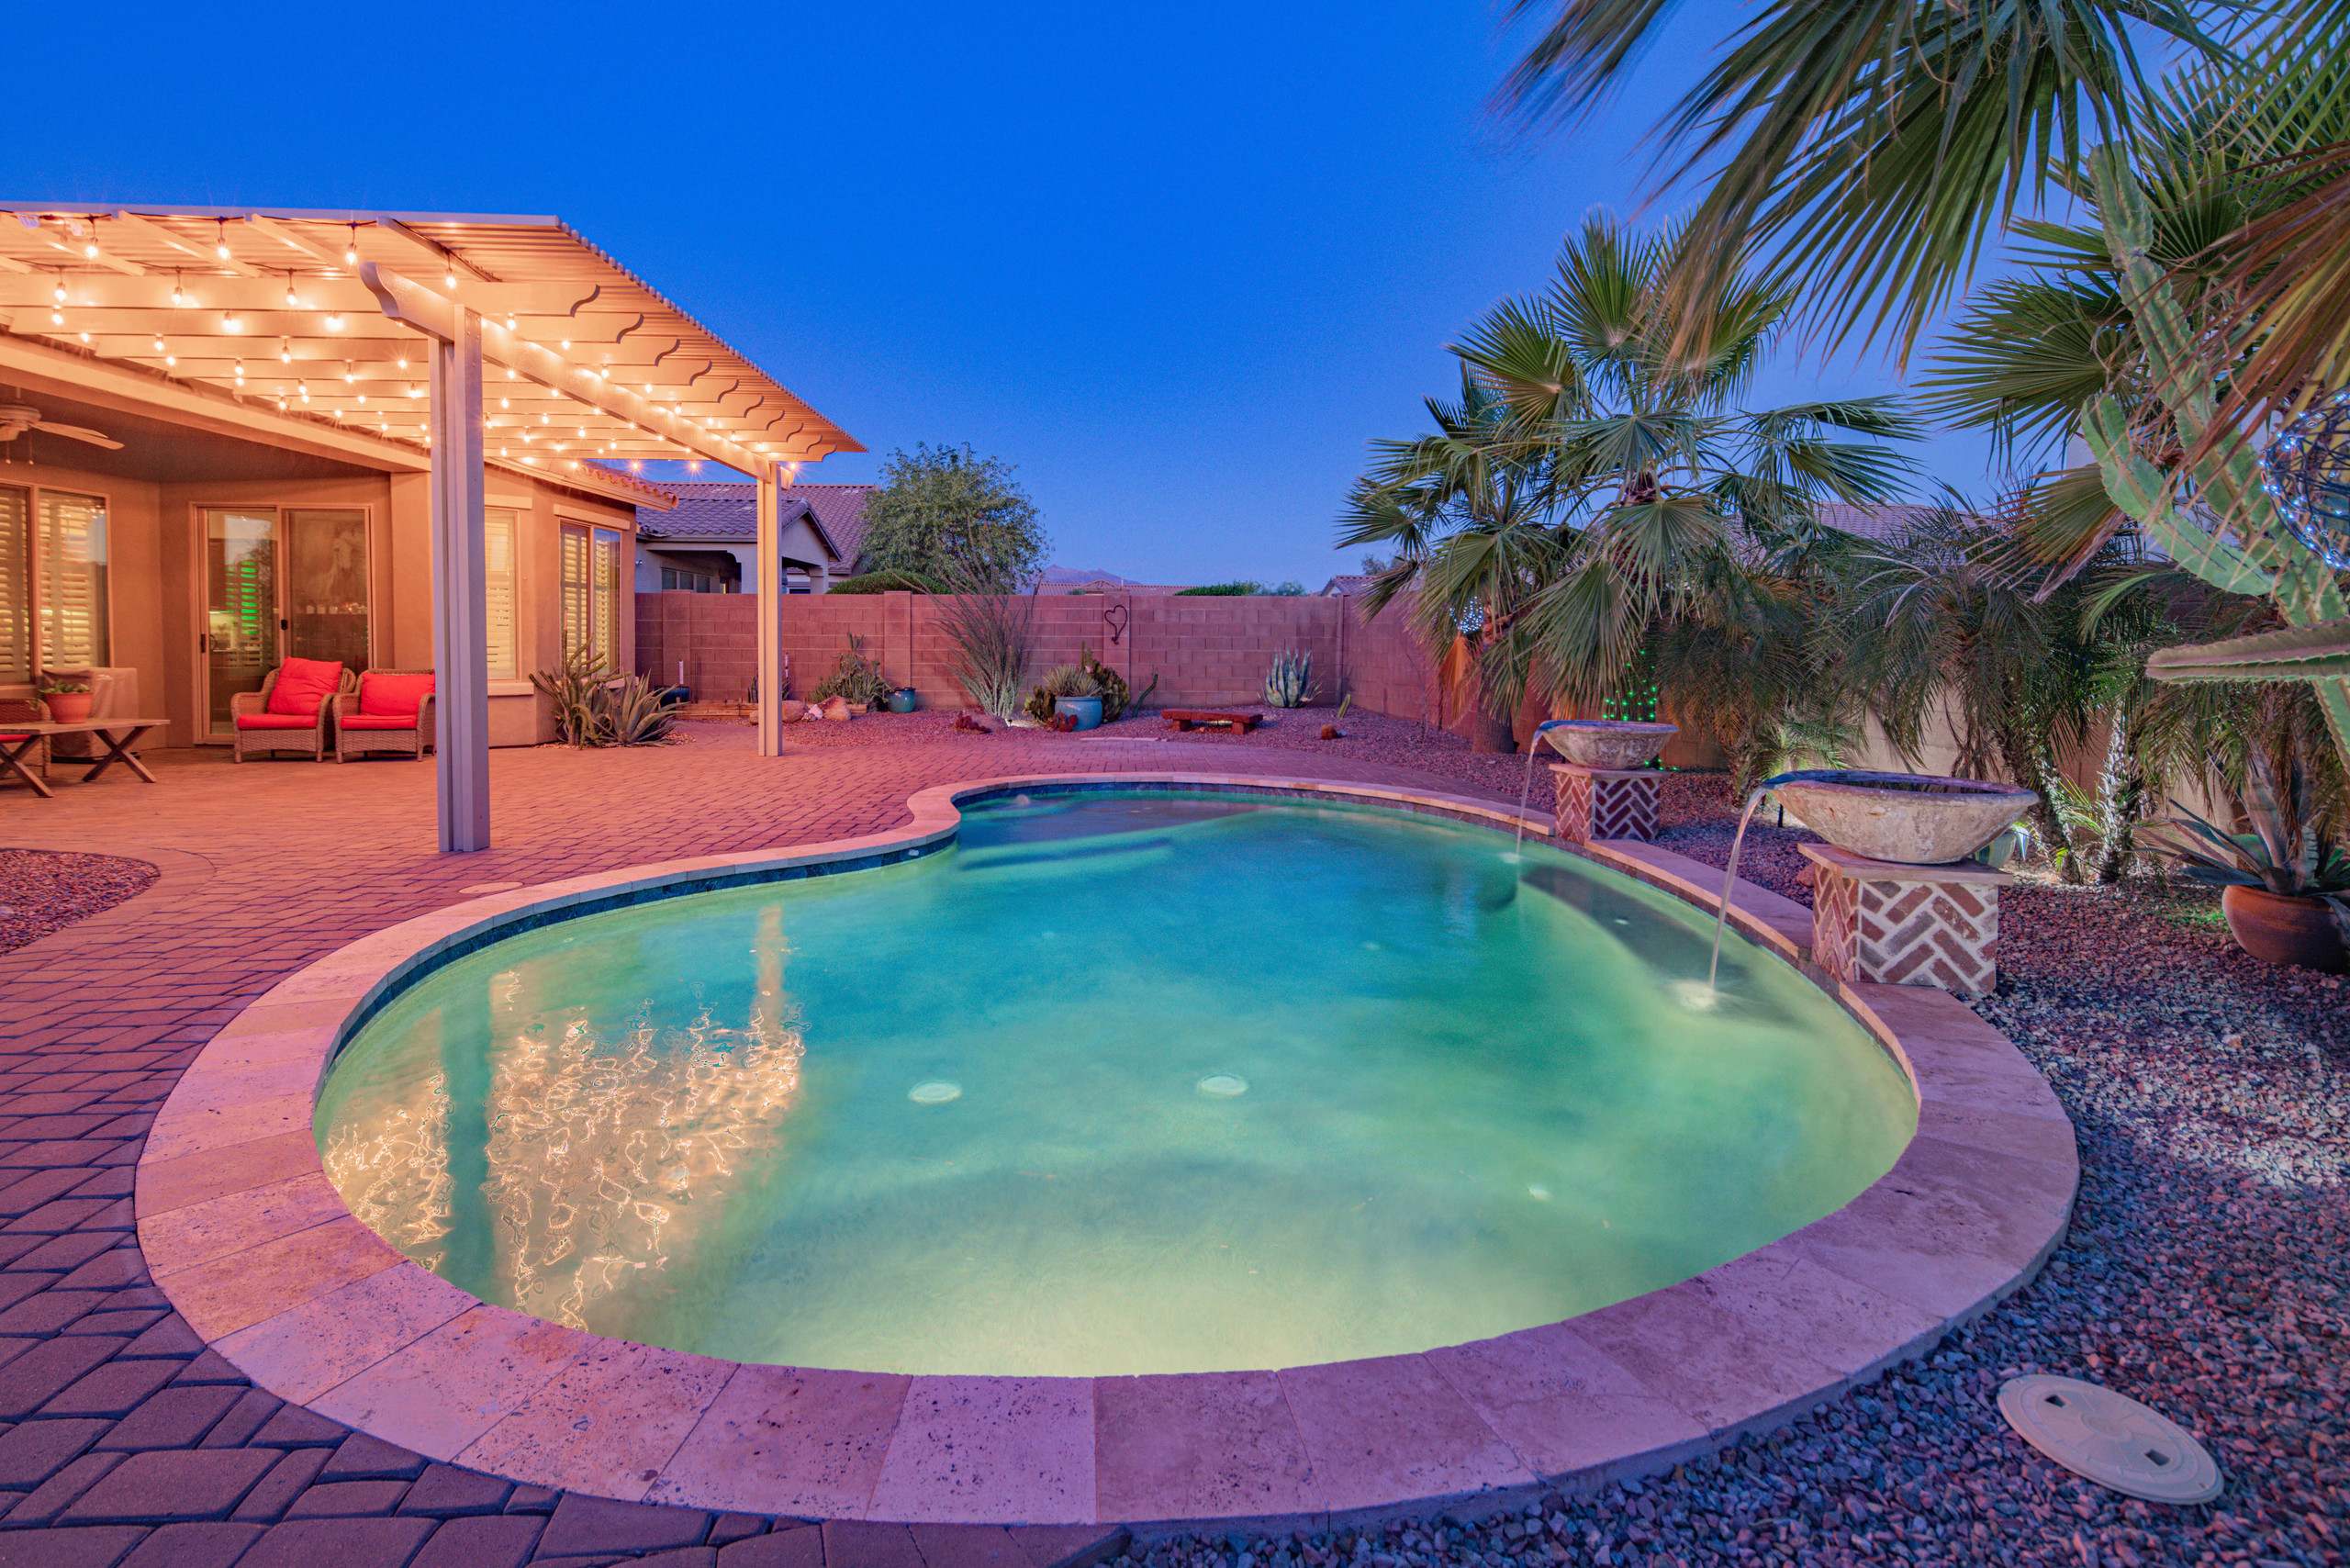 Remodel pool coping backyard design in arizona